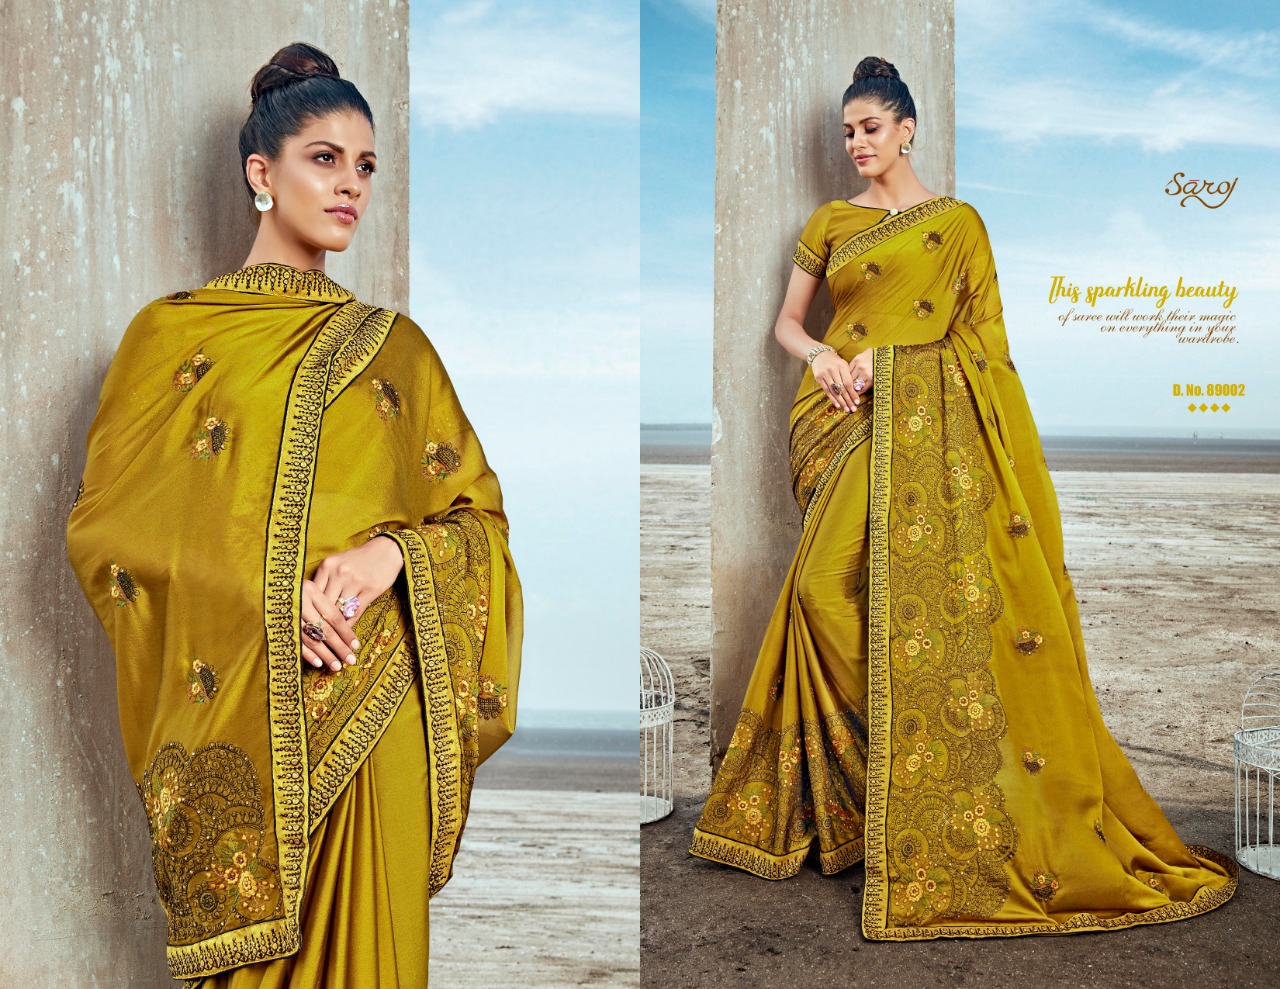 Saroj Saree Fashion Yug 89002